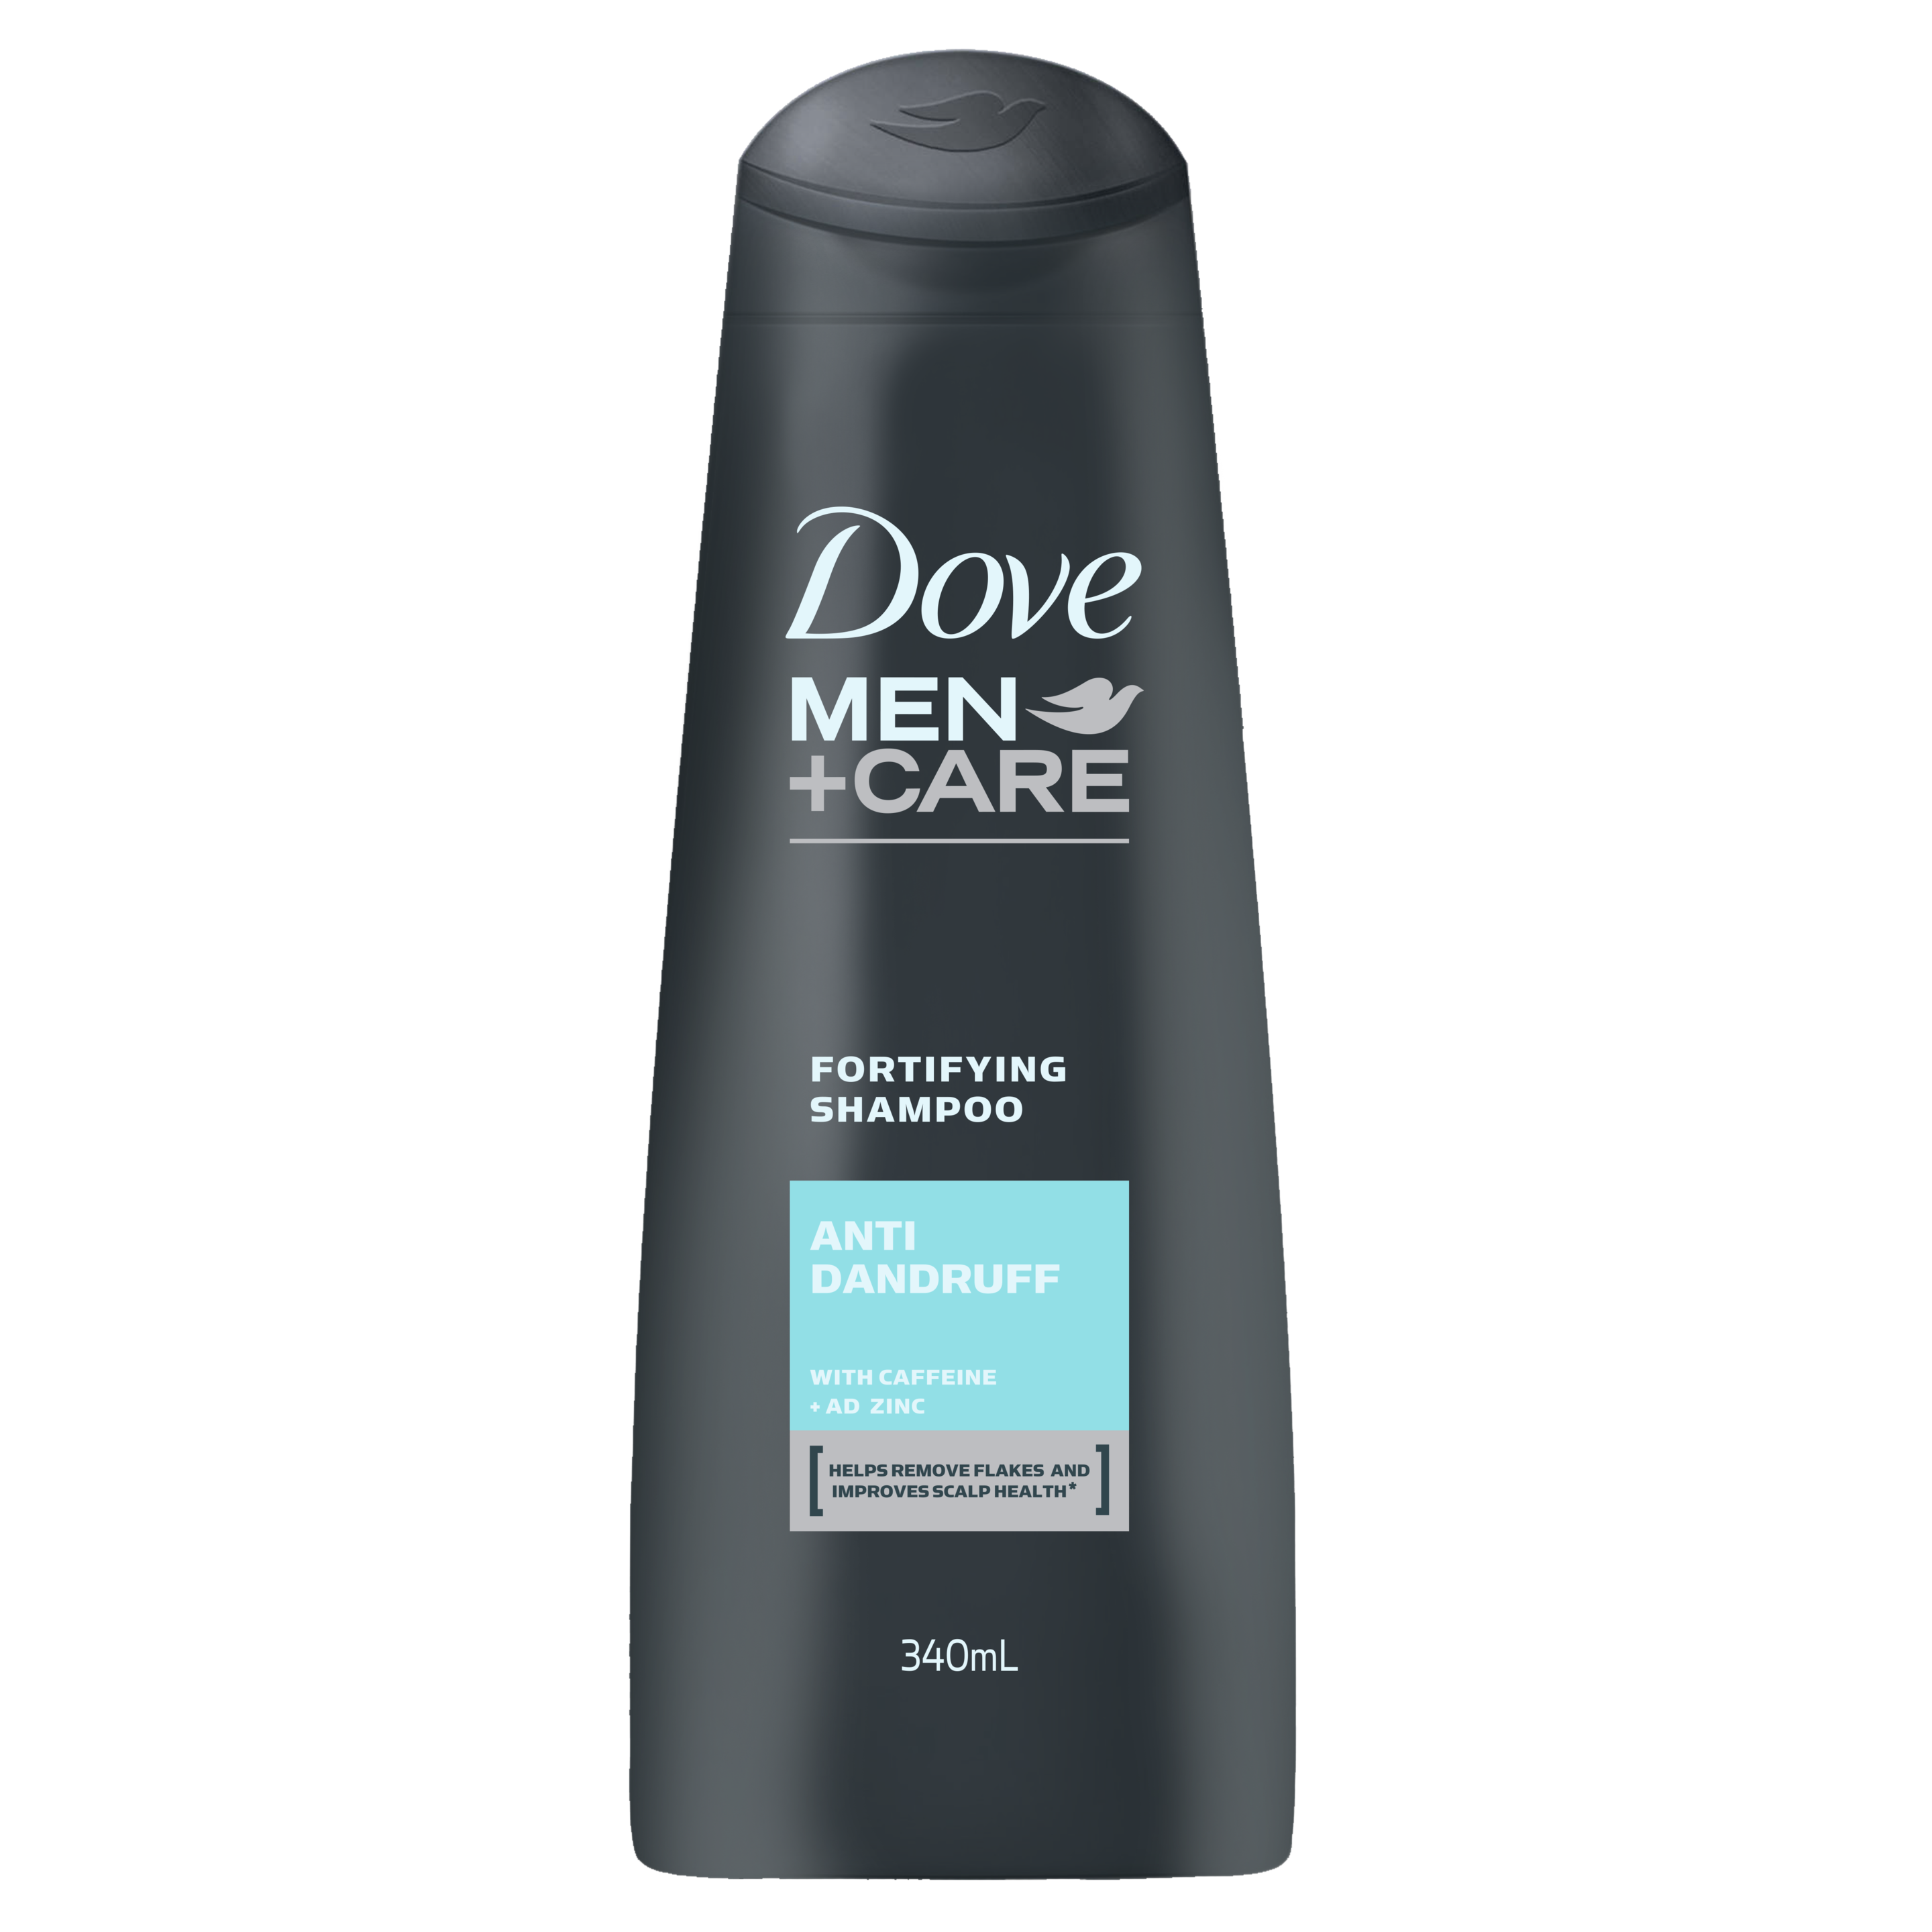 Dove Men+Care Anti Dandruff Fortifying Shampoo 340ml